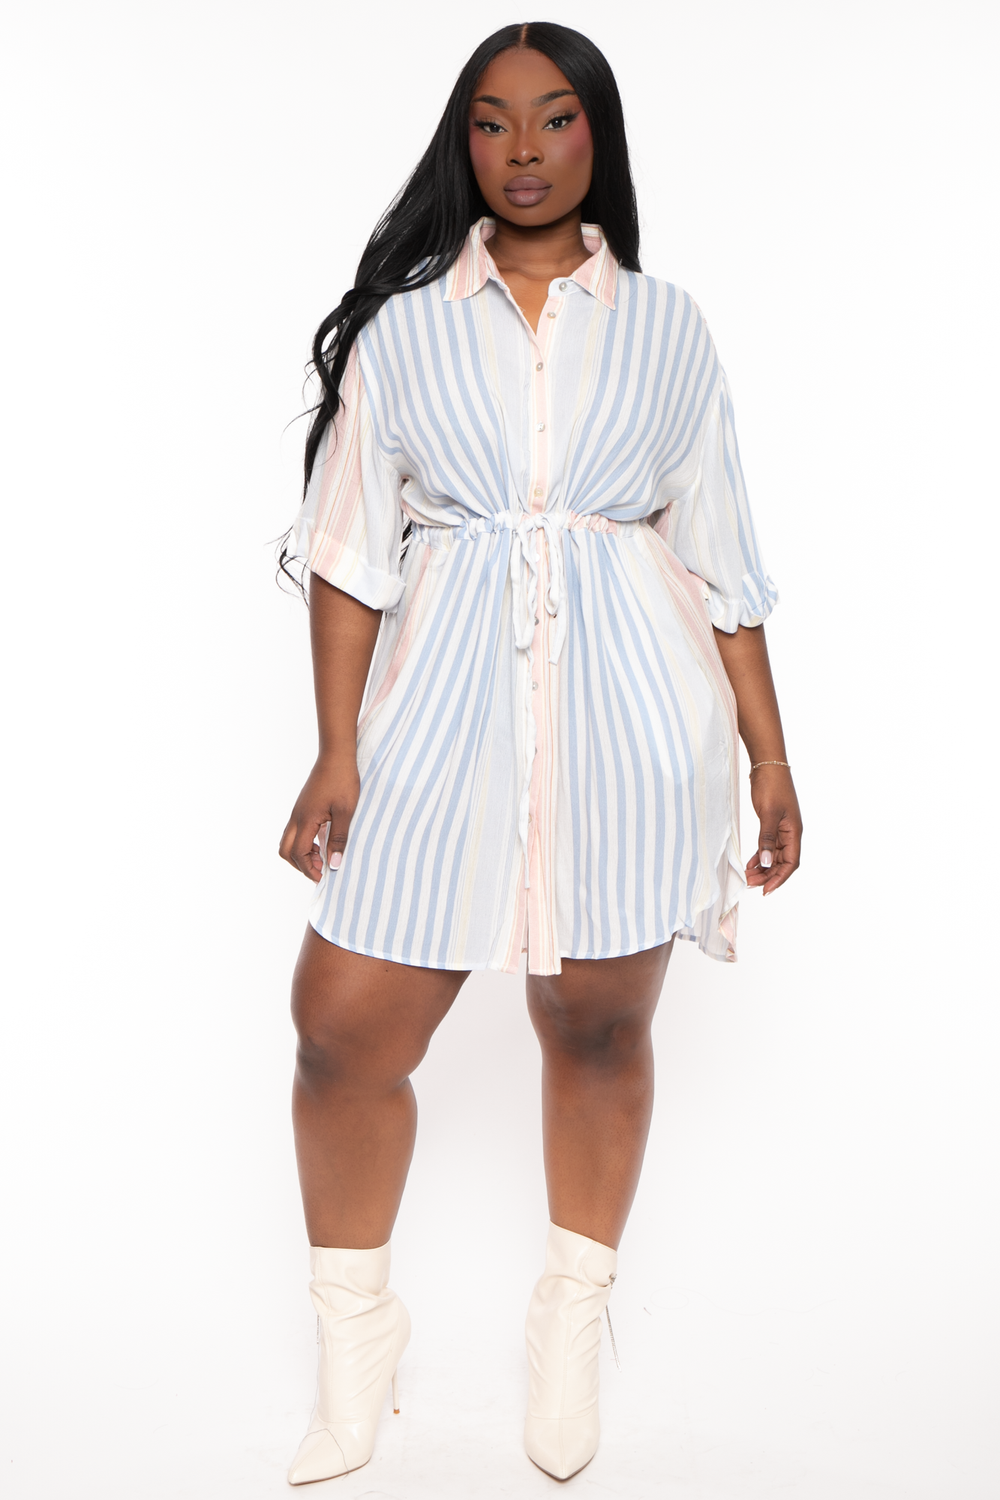 SHOPIN LA Dresses 1X / Multi Plus Size Raviya Striped Shirt Dress - Multi